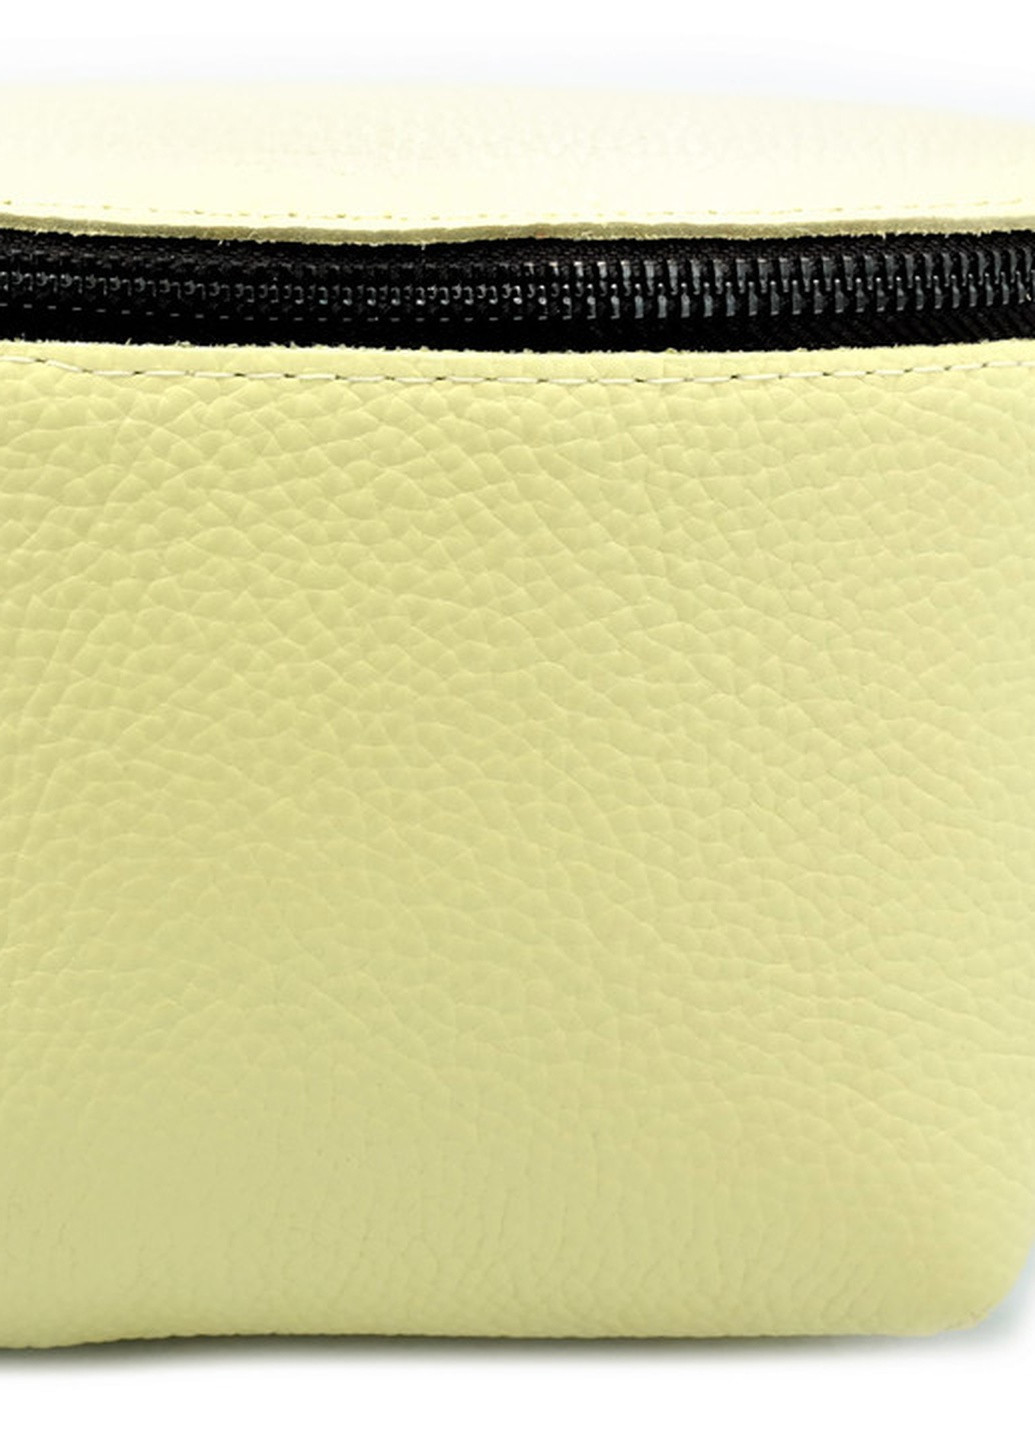 Женская кожаная сумка на пояс бананка цвет жёлтый SKL85-295516 New Trend (259161357)